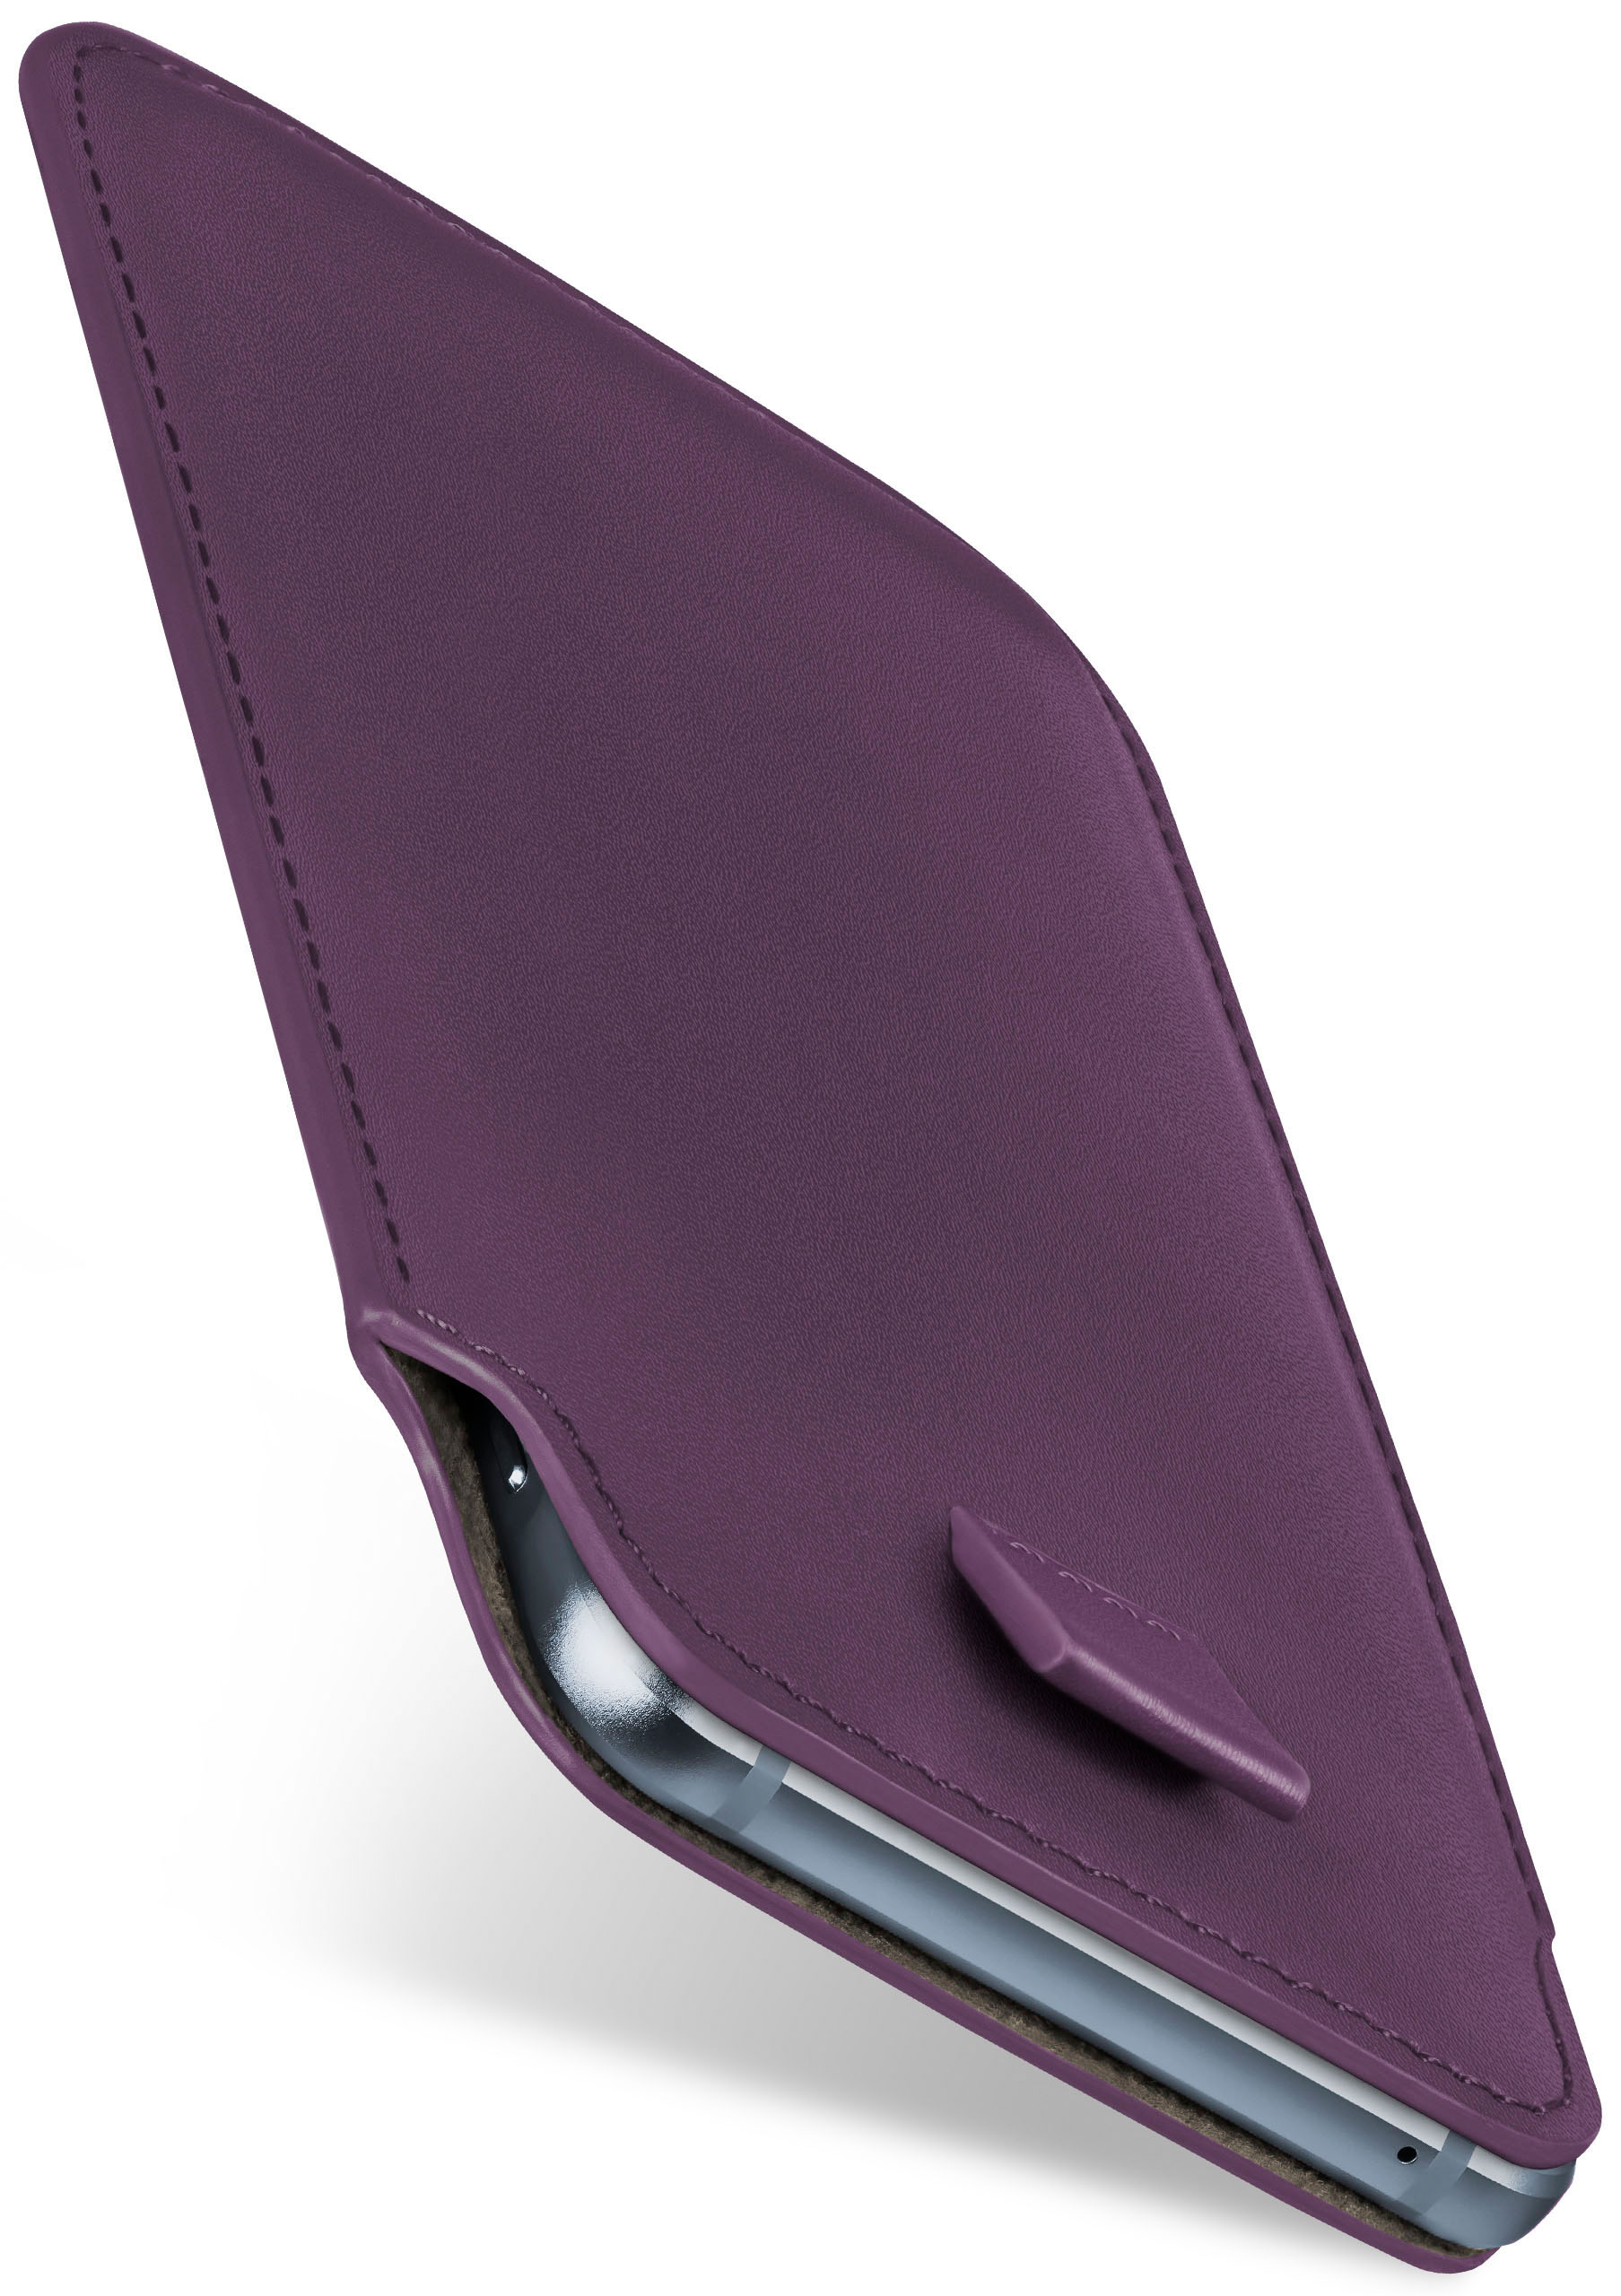 MOEX Slide Samsung, Full Indigo-Violet Galaxy Cover, A6 (2018), Case